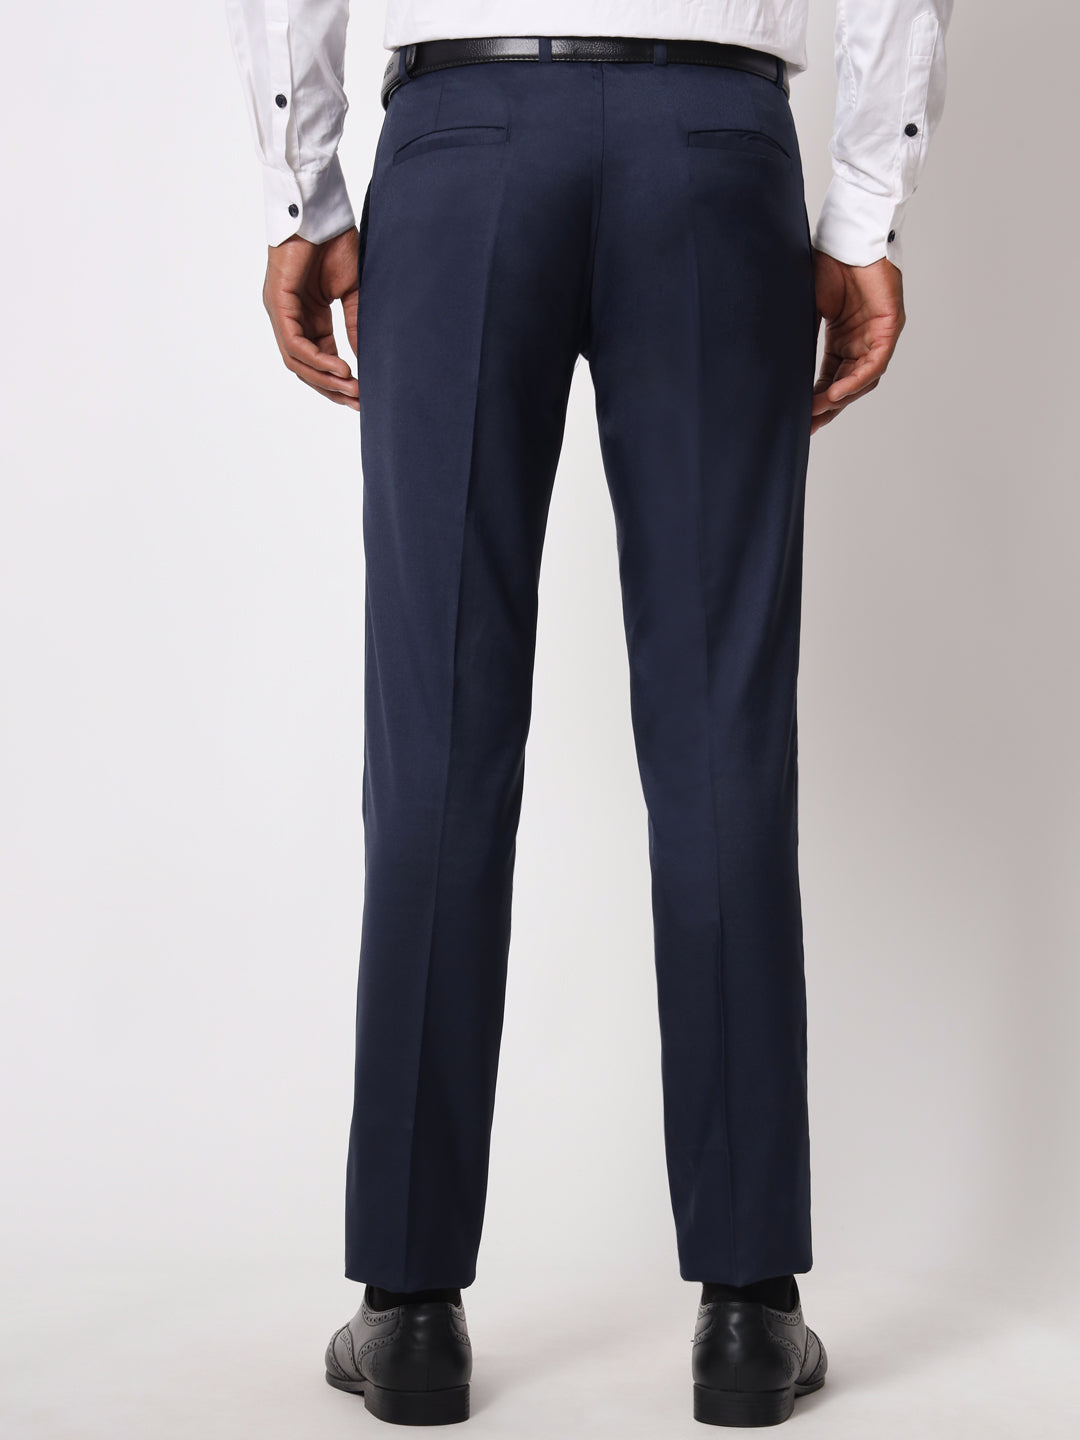 Men Formal Dress Pants Flat Front Straight Trousers Office Business Slim Fit  | eBay